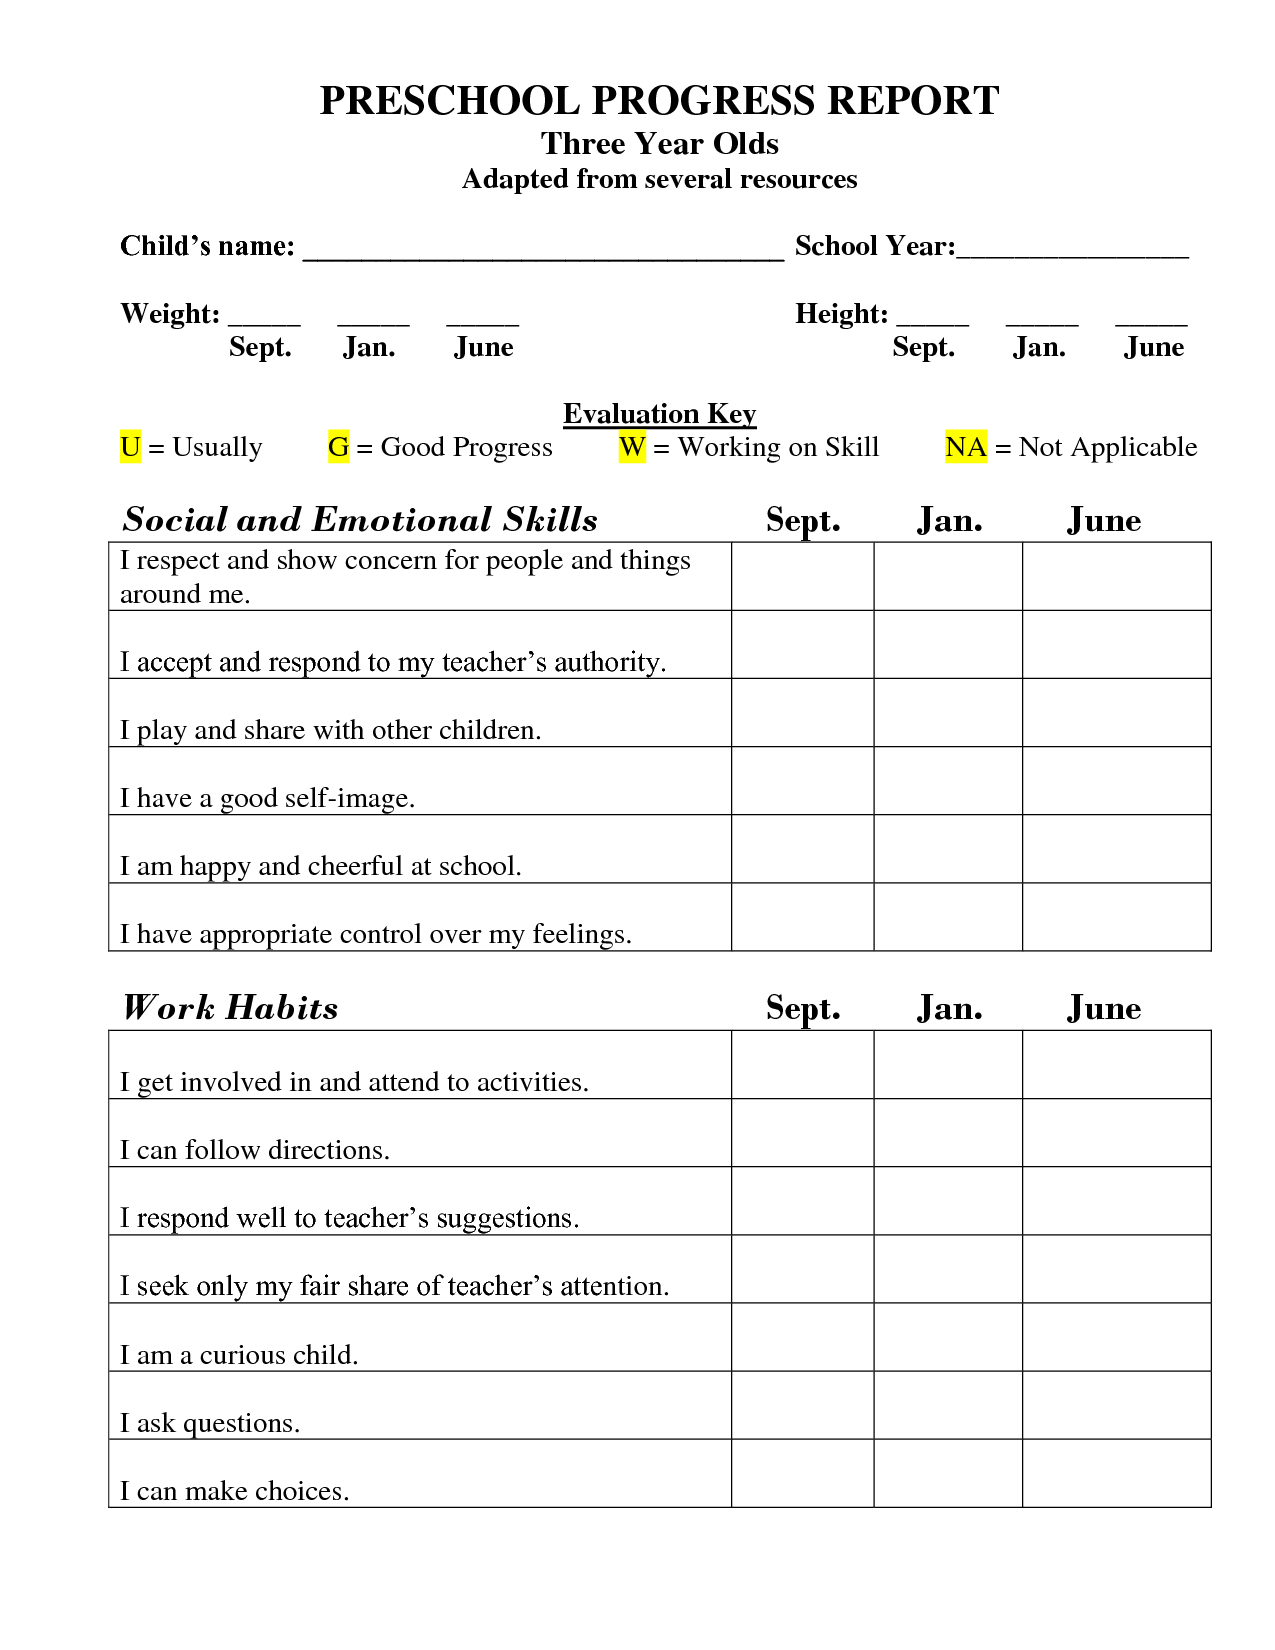 Printable Preschool Progress Report Template | School Report Intended For Preschool Progress Report Template